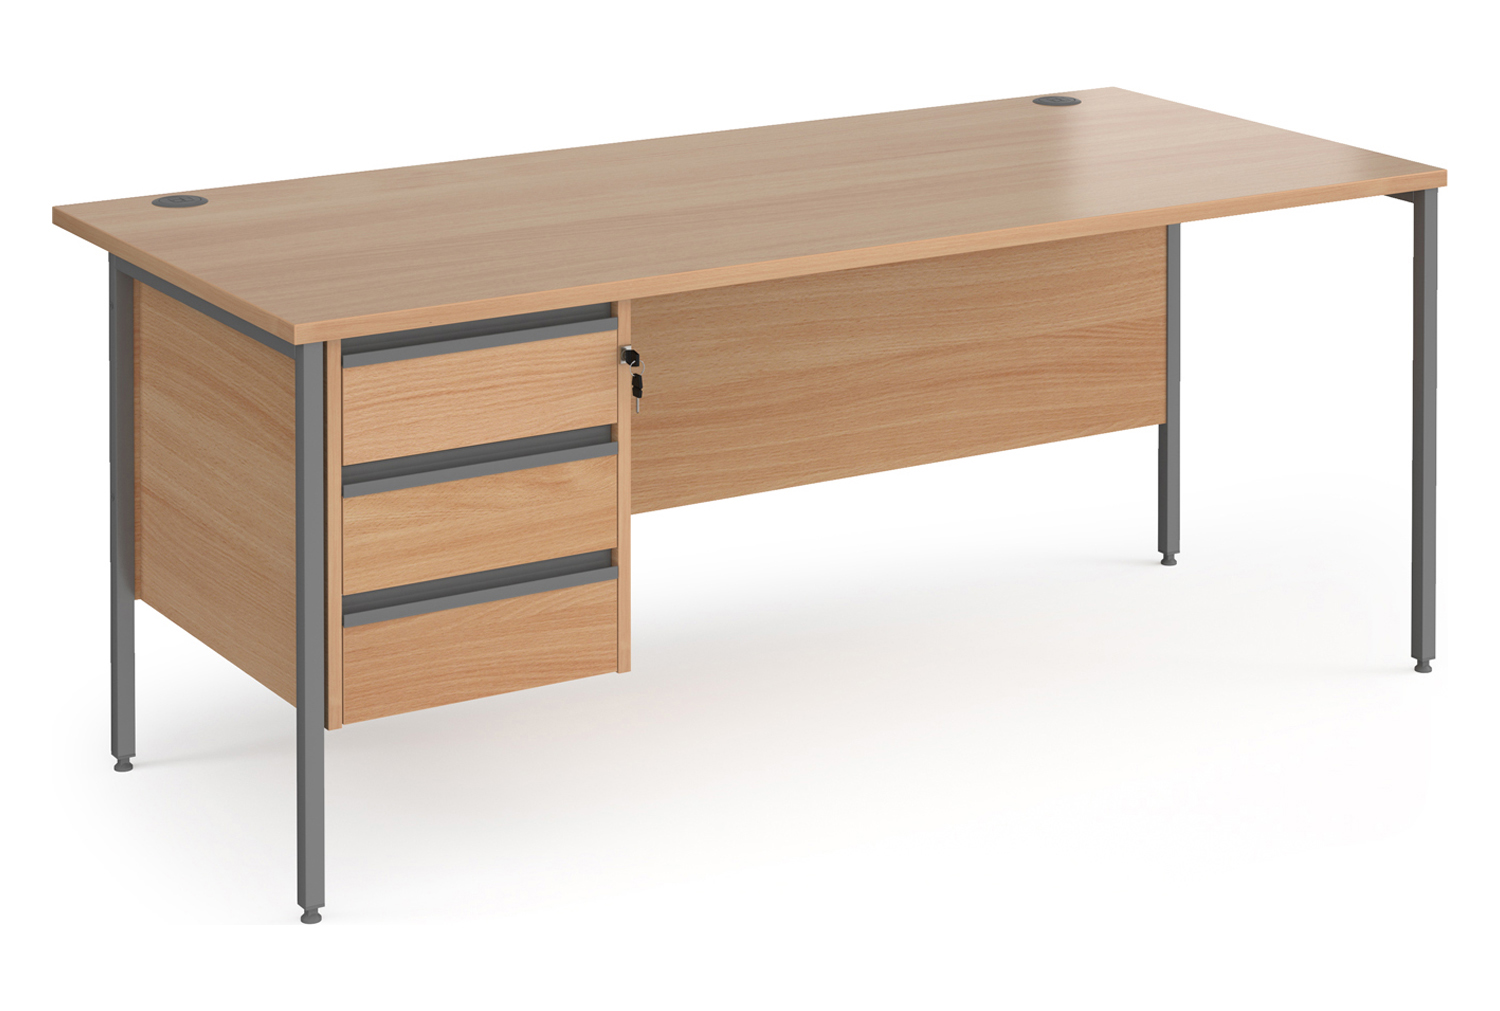 Value Line Classic+ Rectangular H-Leg Office Desk 3 Drawers (Graphite Leg), 180wx80dx73h (cm), Beech, Express Delivery